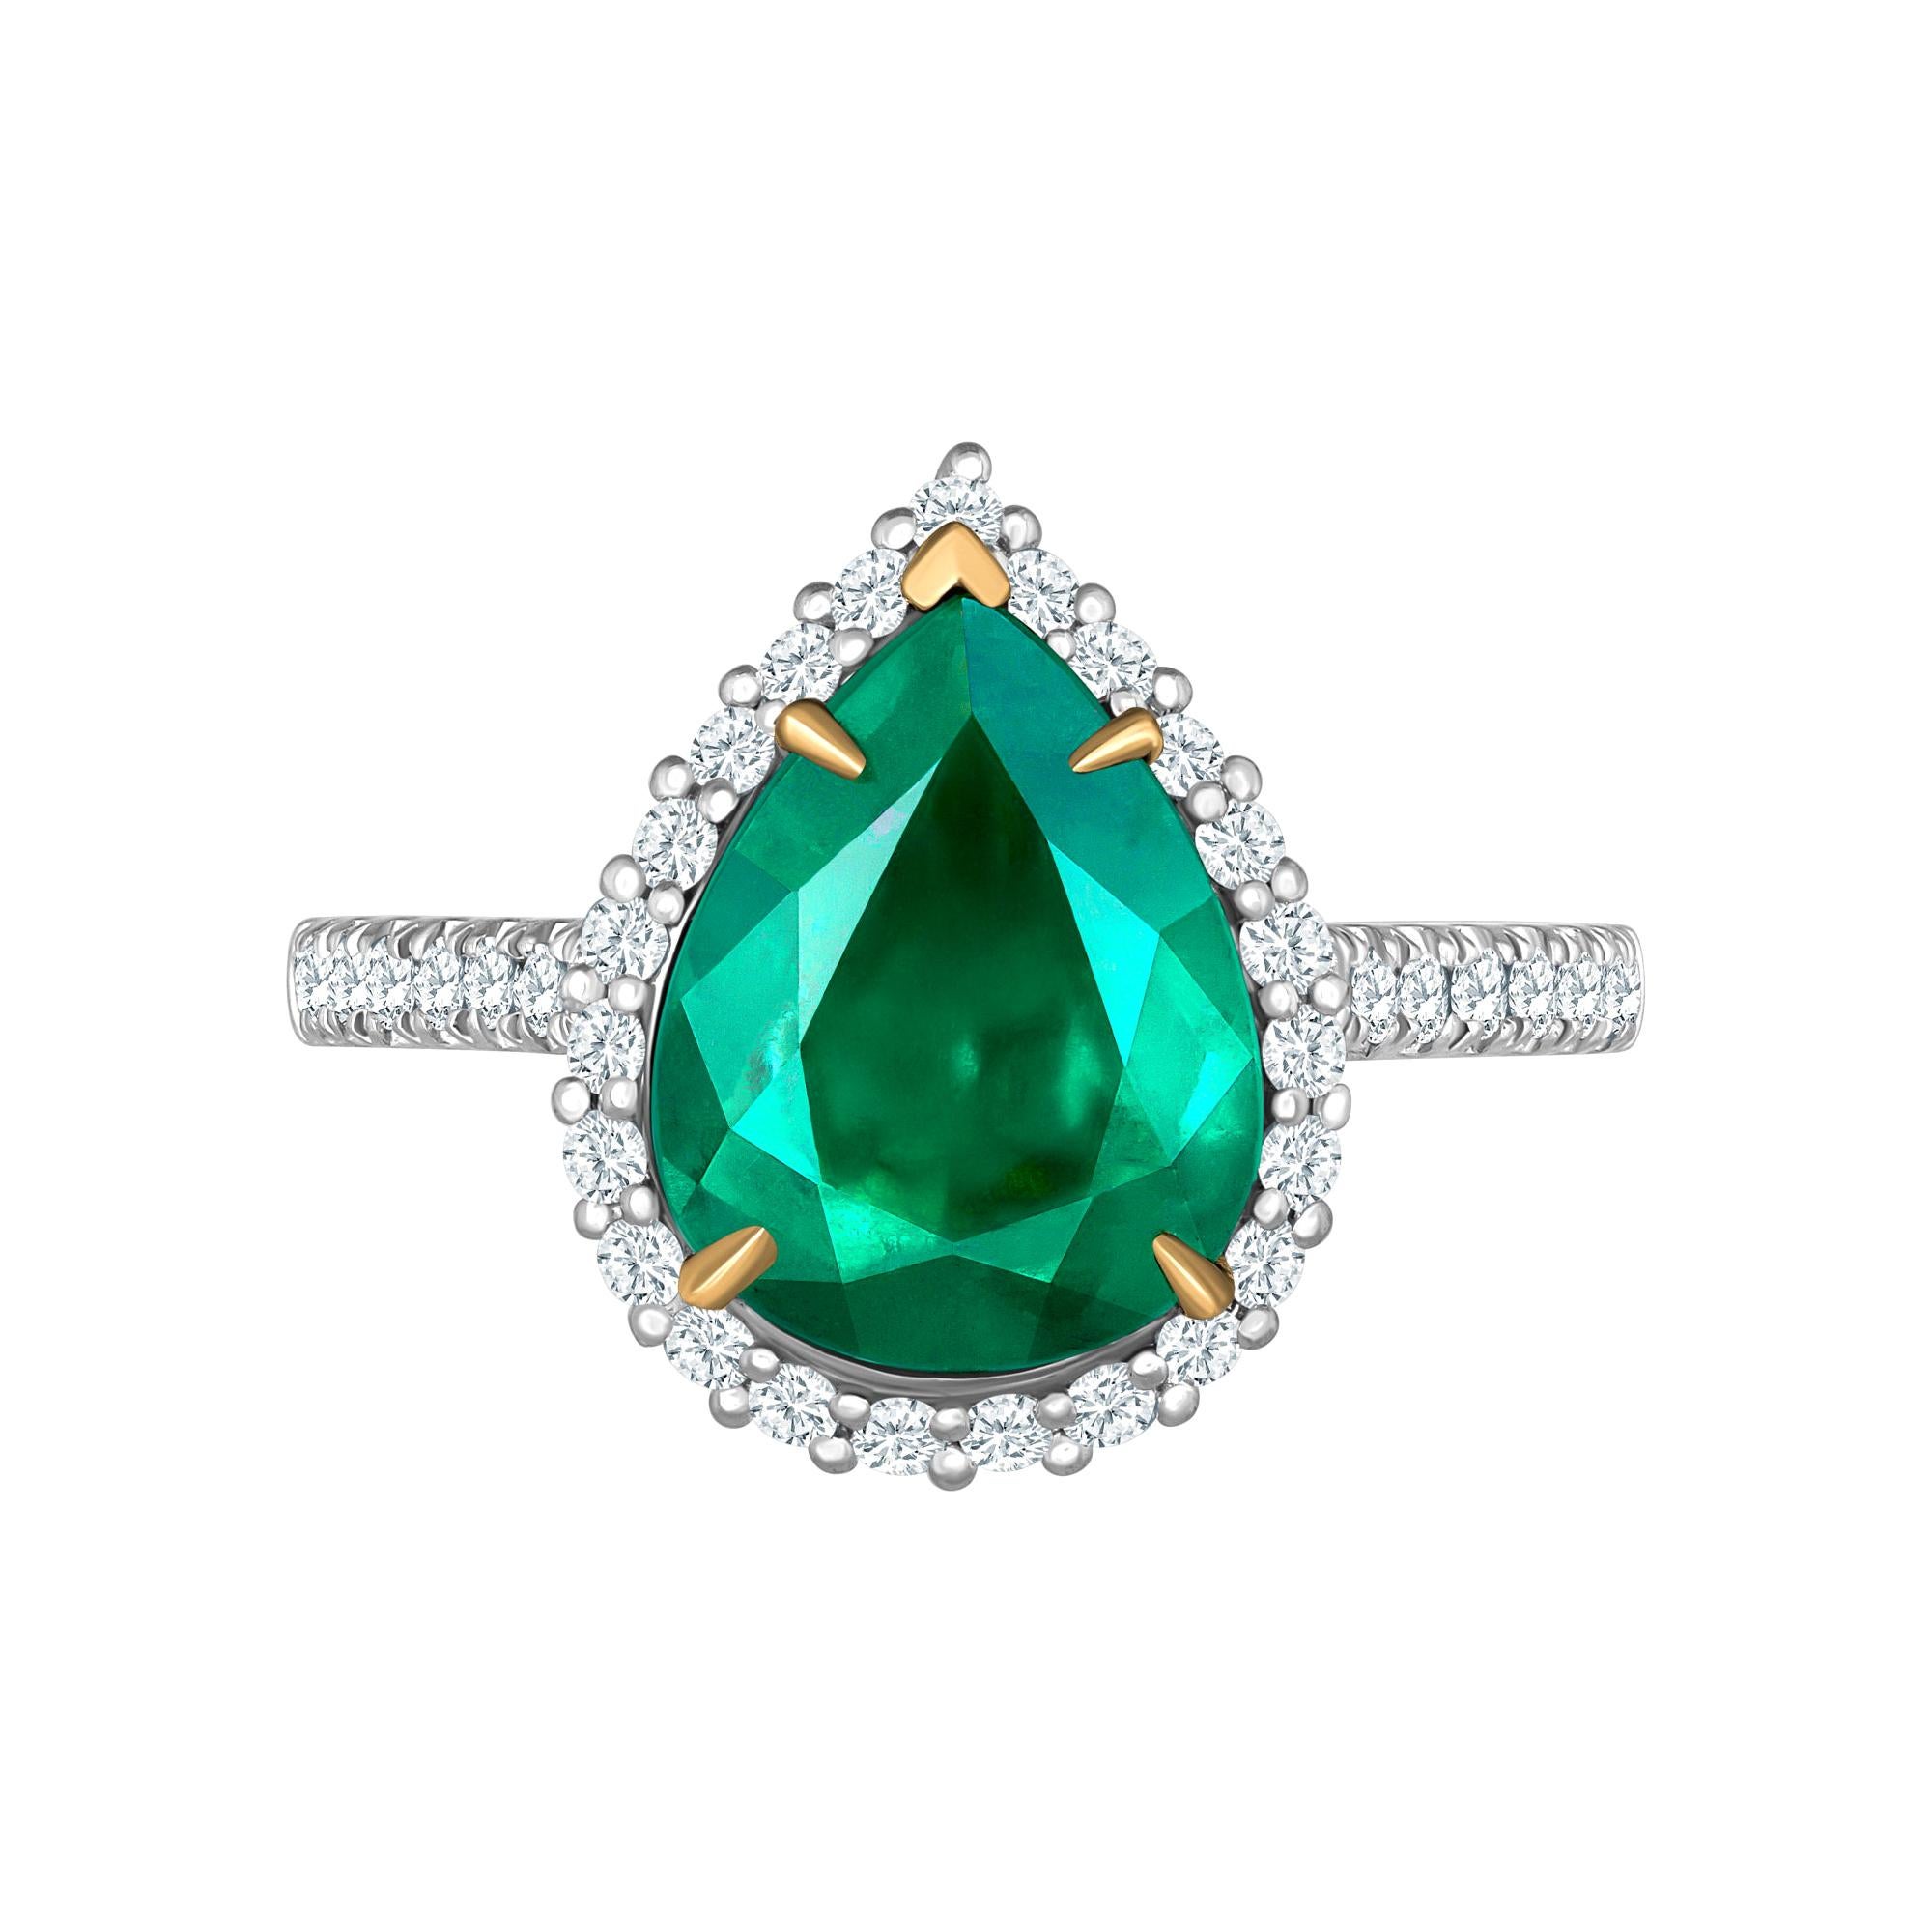 Emilio Jewelry 2.95 Carat Certified Vivid Green Emerald Diamond Ring